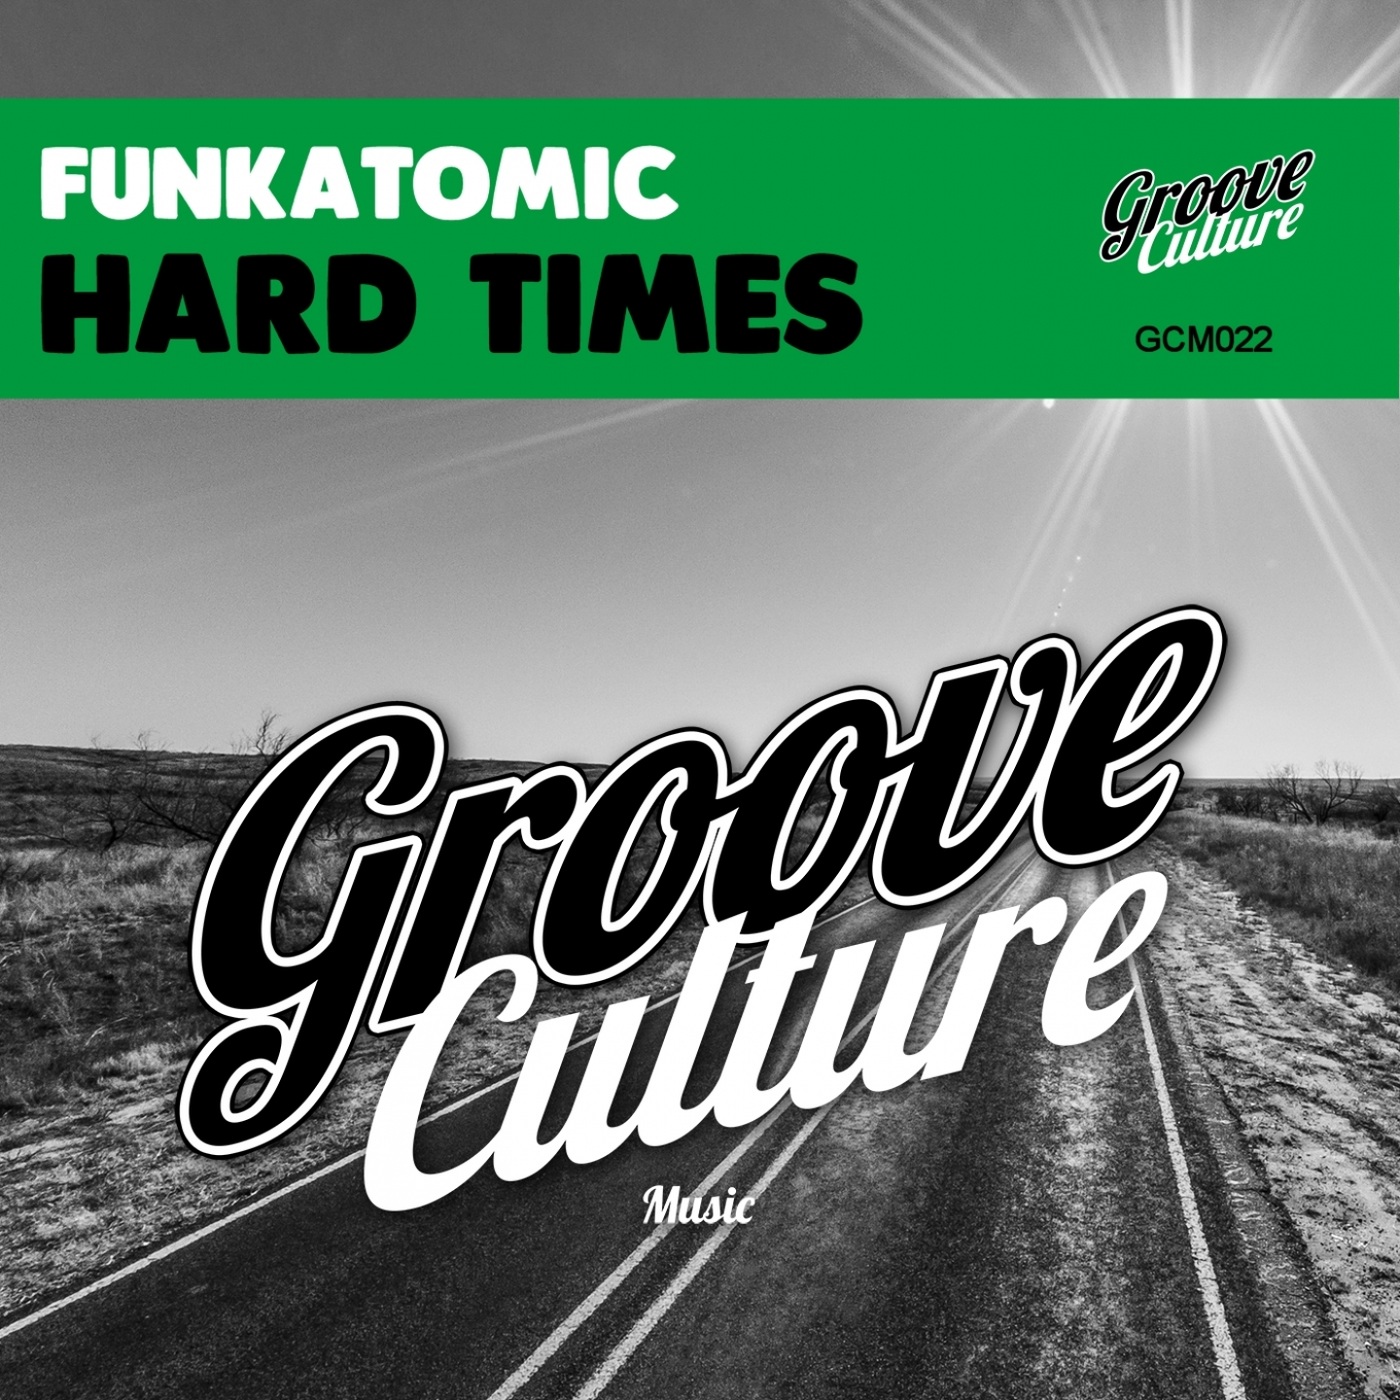 Funkatomic - Hard Times / Groove Culture